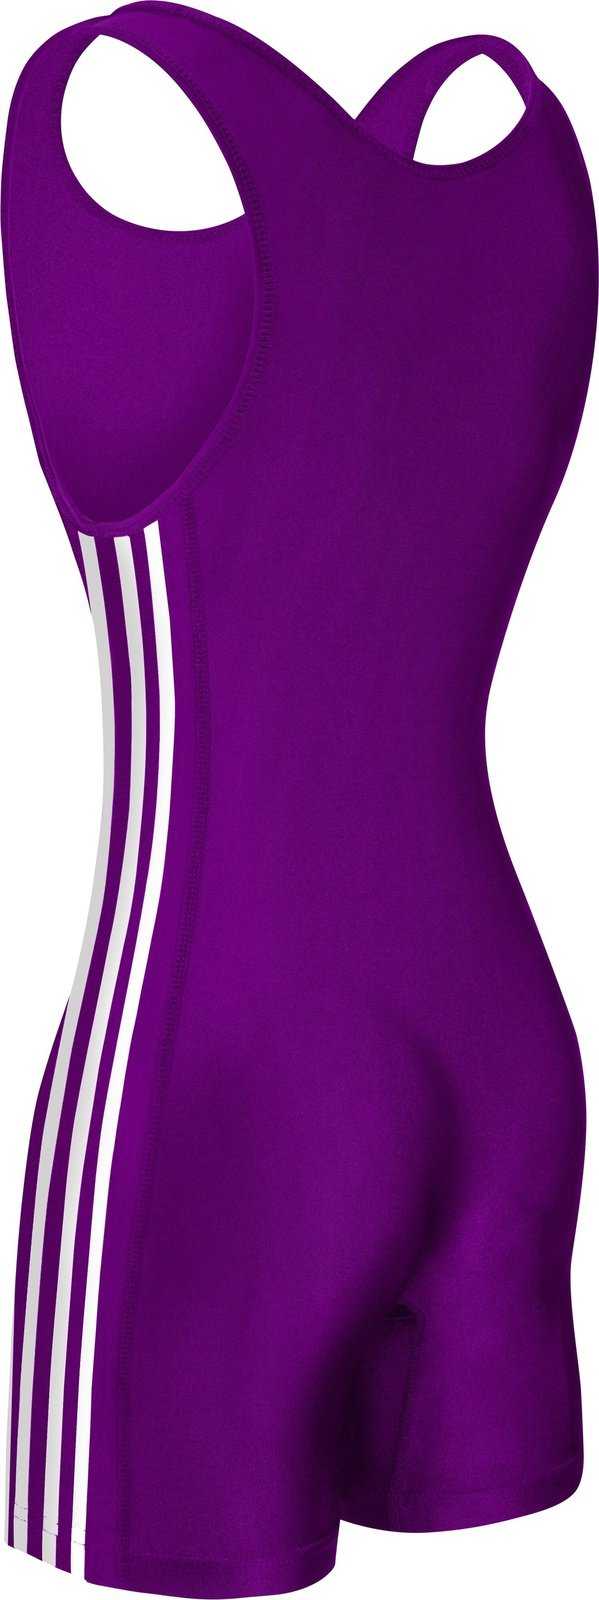 Adidas aS102s 3 Stripe Wrestling Singlet - Purple White - HIT a Double